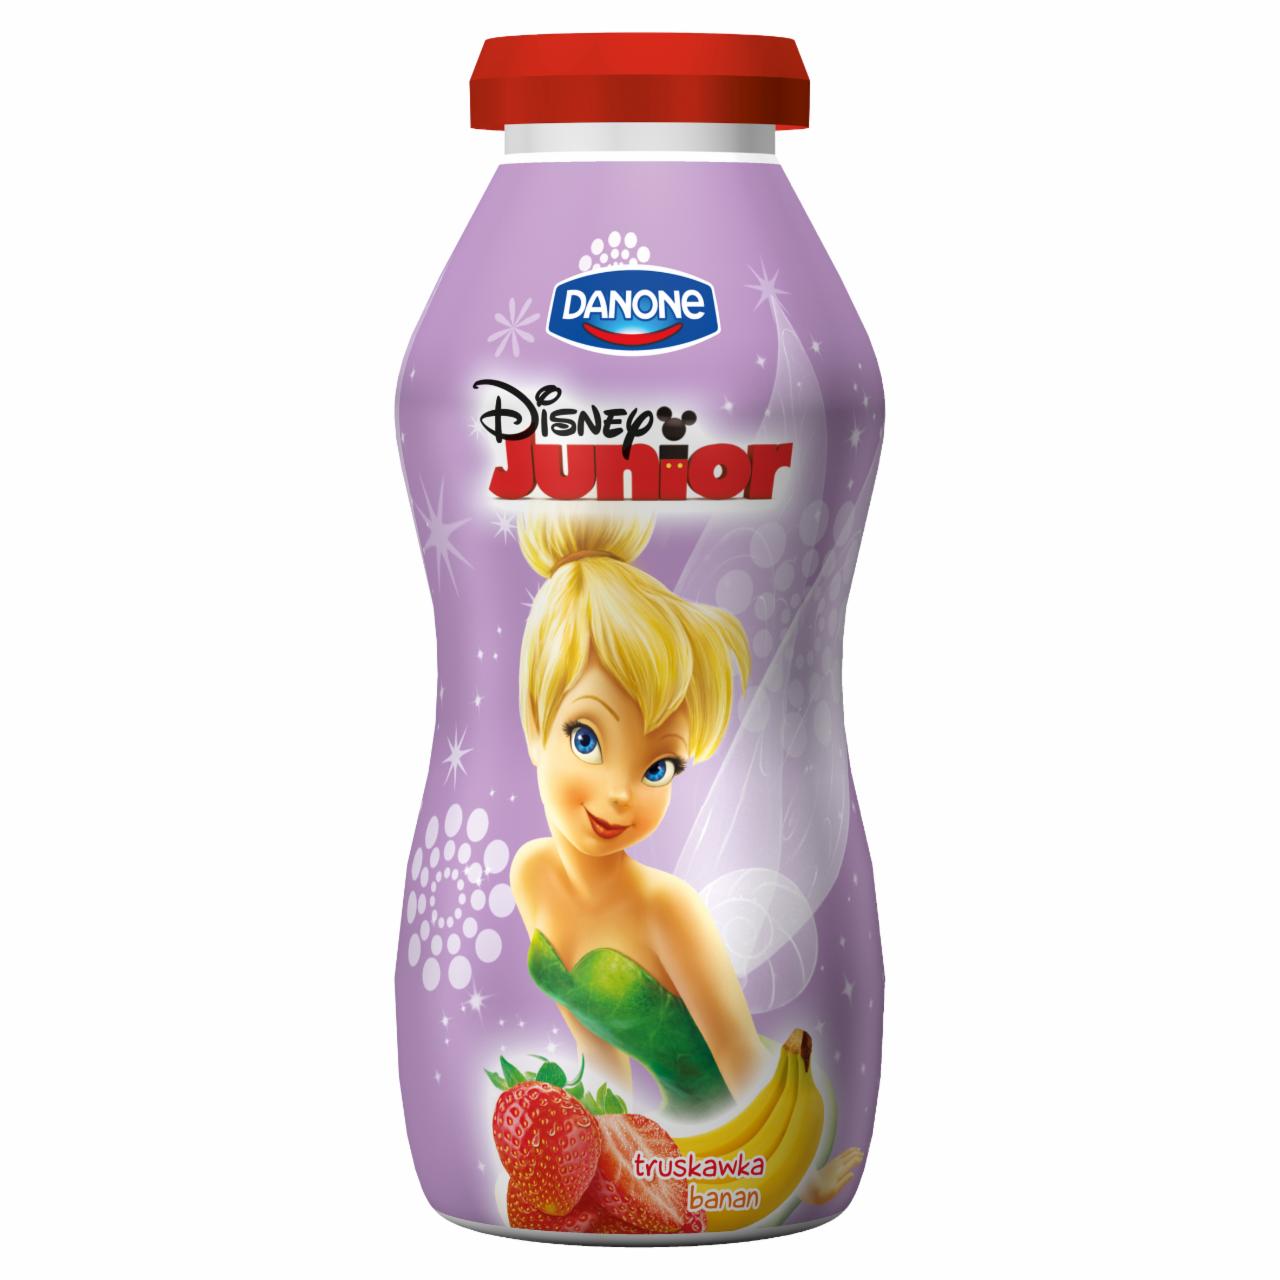 Zdjęcia - Danone Disney Junior truskawka banan Napój jogurtowy 180 g